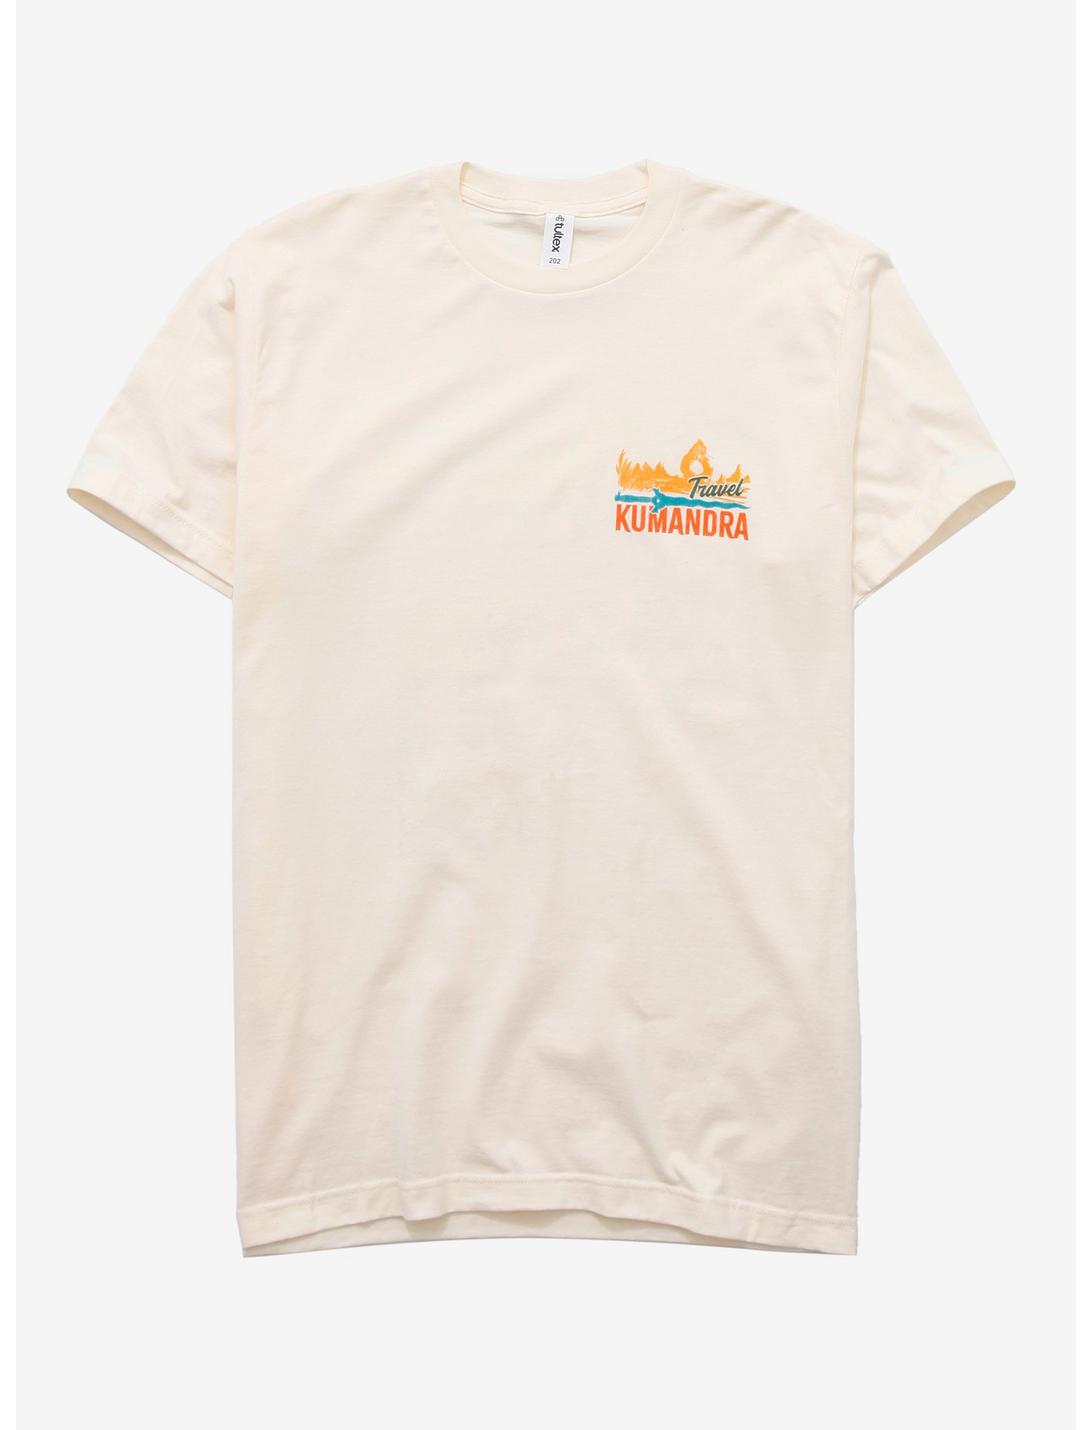 Disney Raya And The Last Dragon Travel Kumandra T-Shirt, CREAM, hi-res